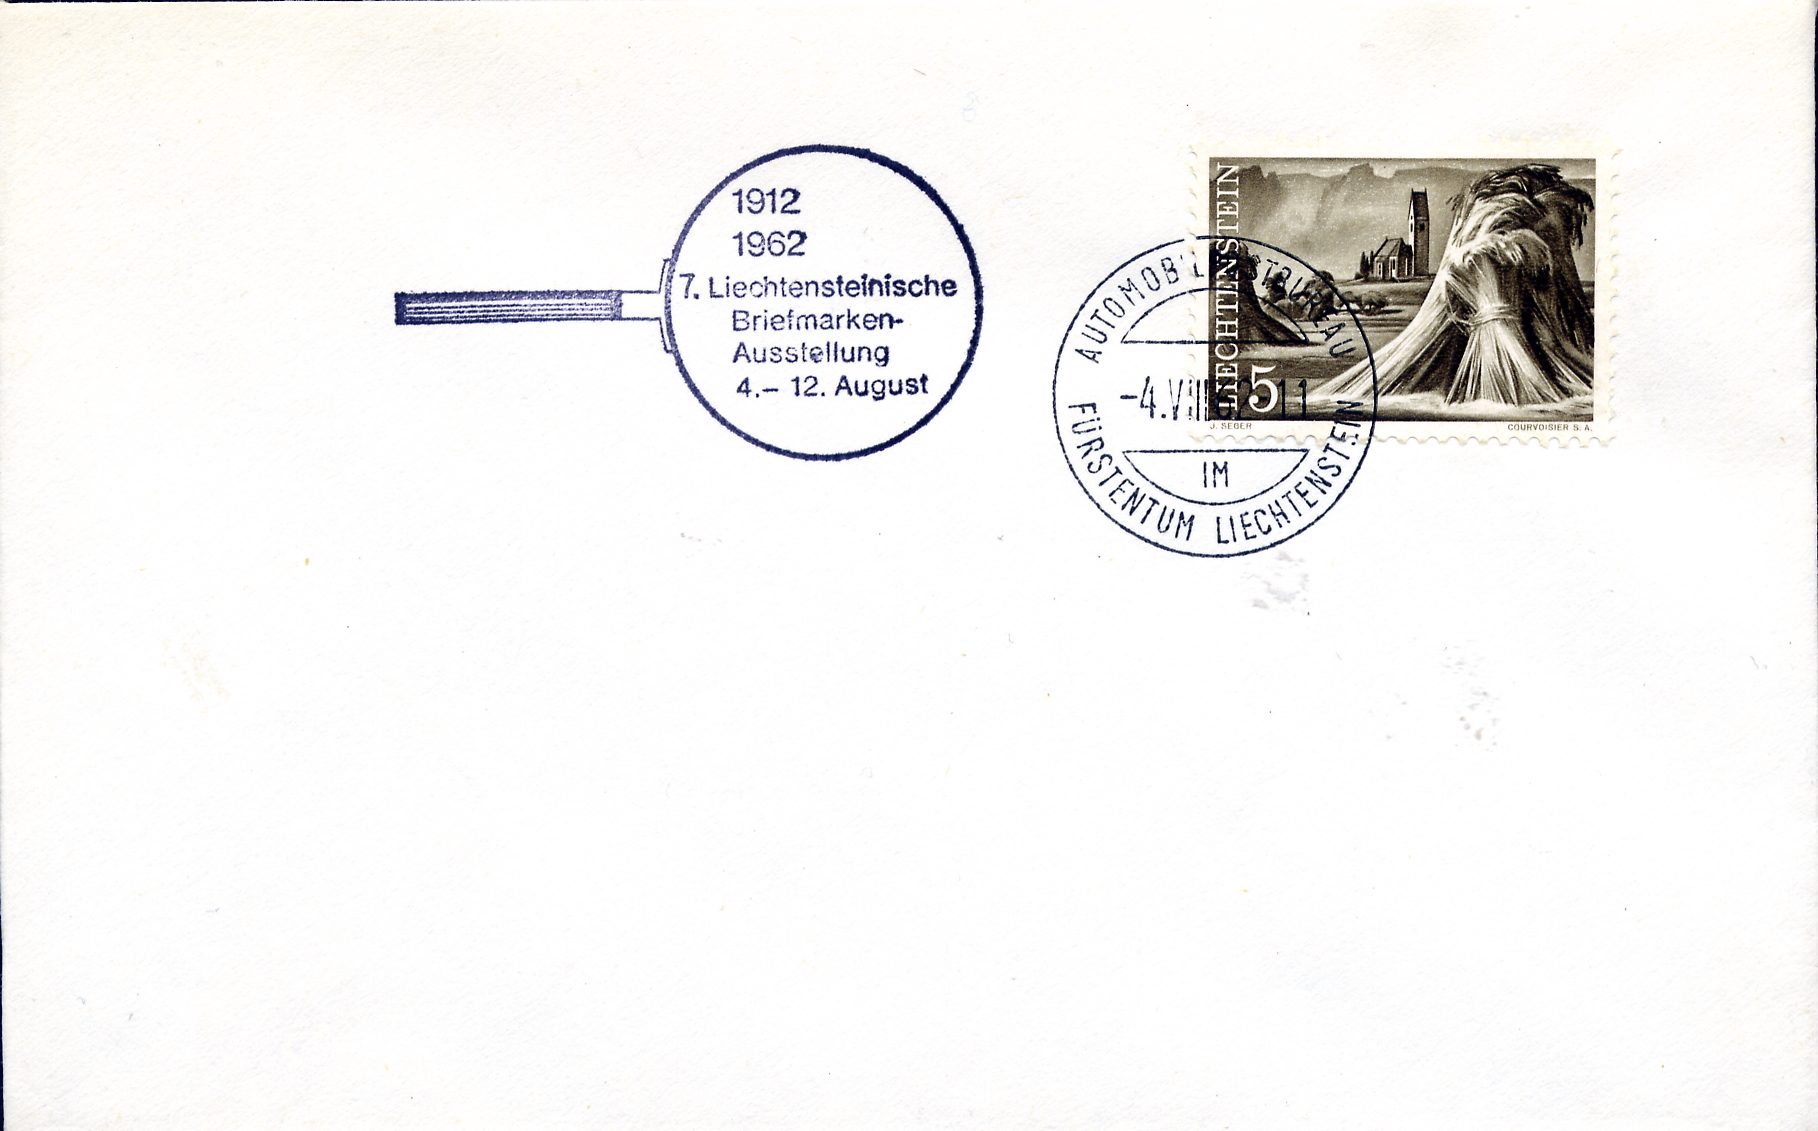 https://swiss-stamps.org/wp-content/uploads/2023/12/1962-8-LIBA-62.jpg